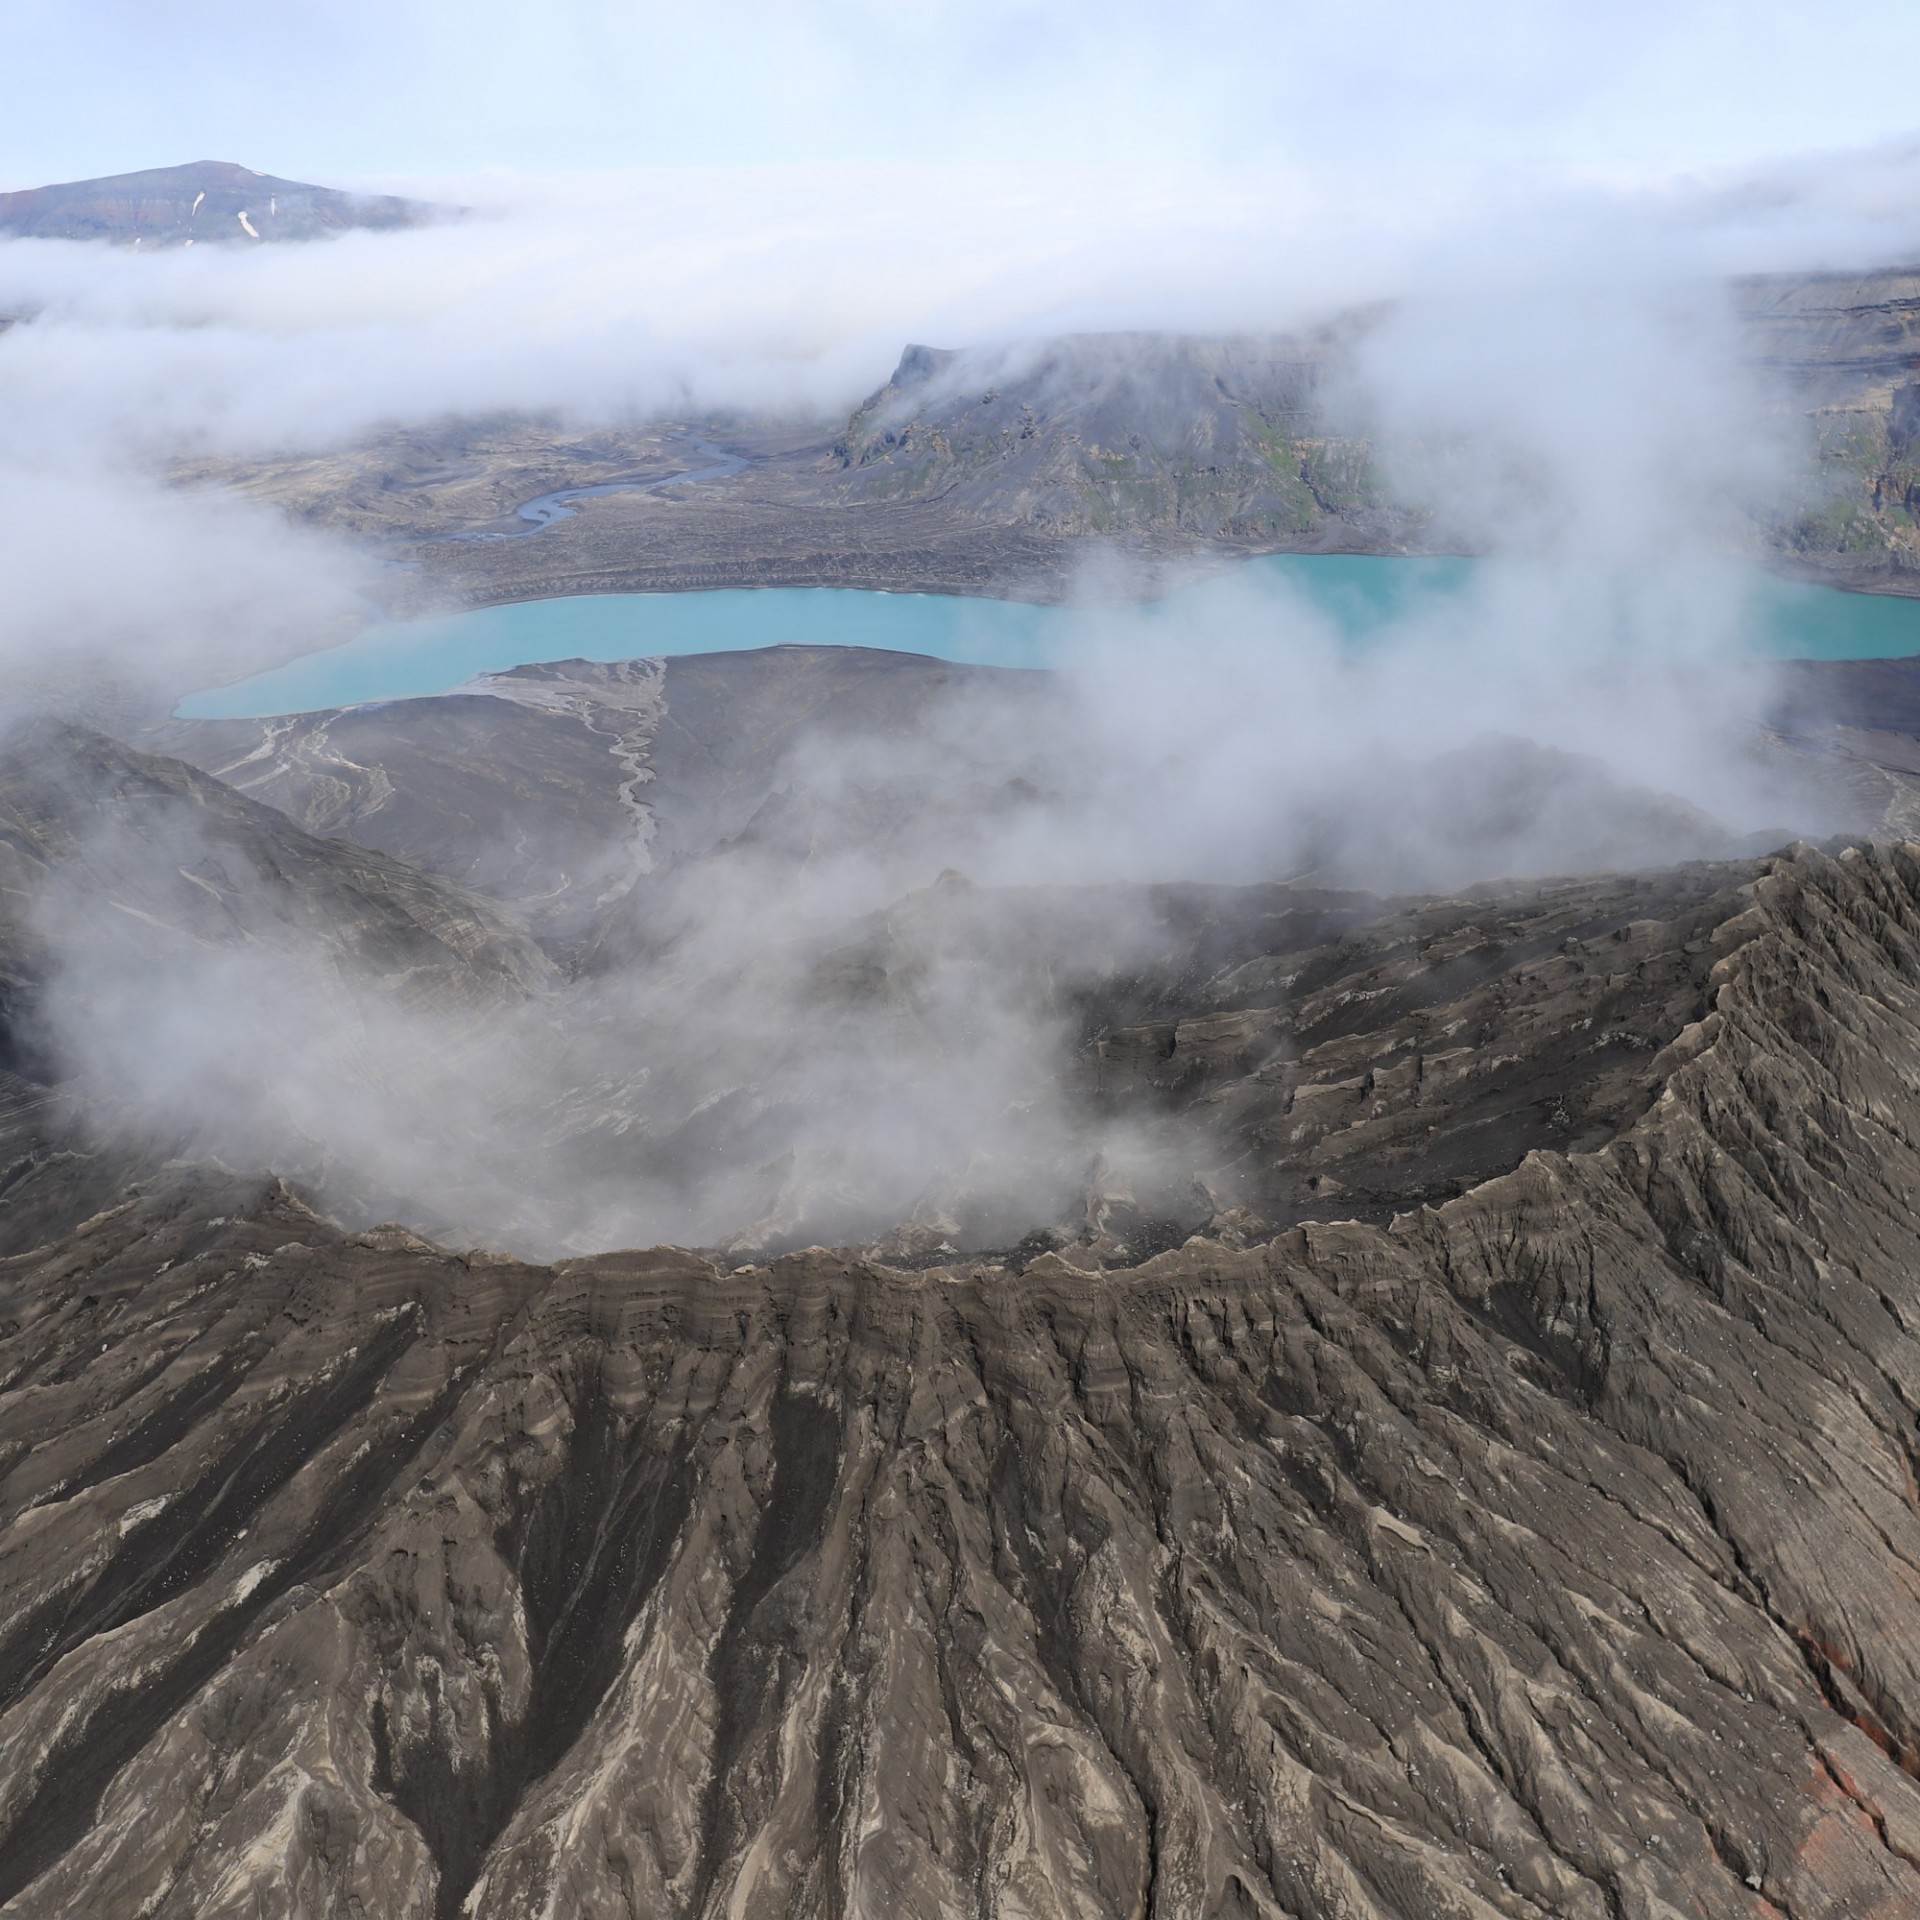 Rim of volcanic 'Cone D' inside of the Okmok caldera, Umnak Island, Alaska, one of the volcanoes studied by Lamont volcanologists. Credit: Nick Frearson